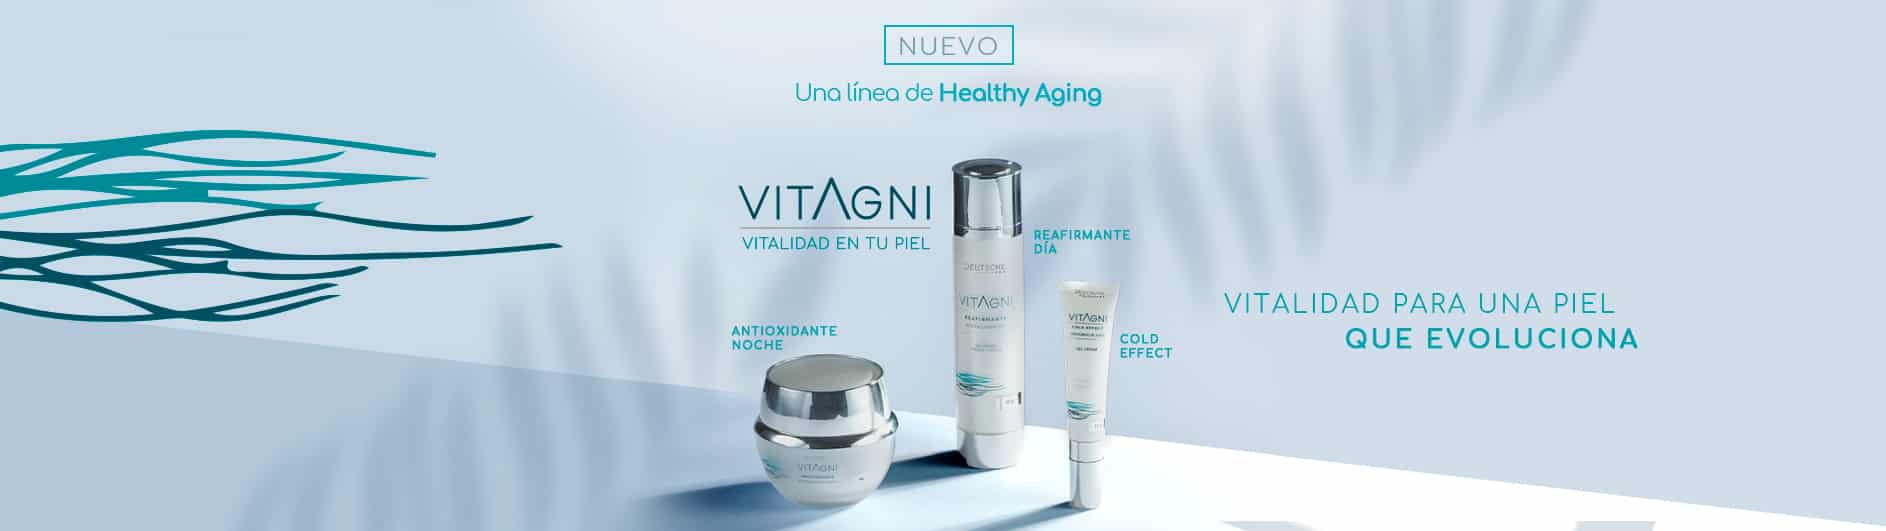 Vitagni healthy aging